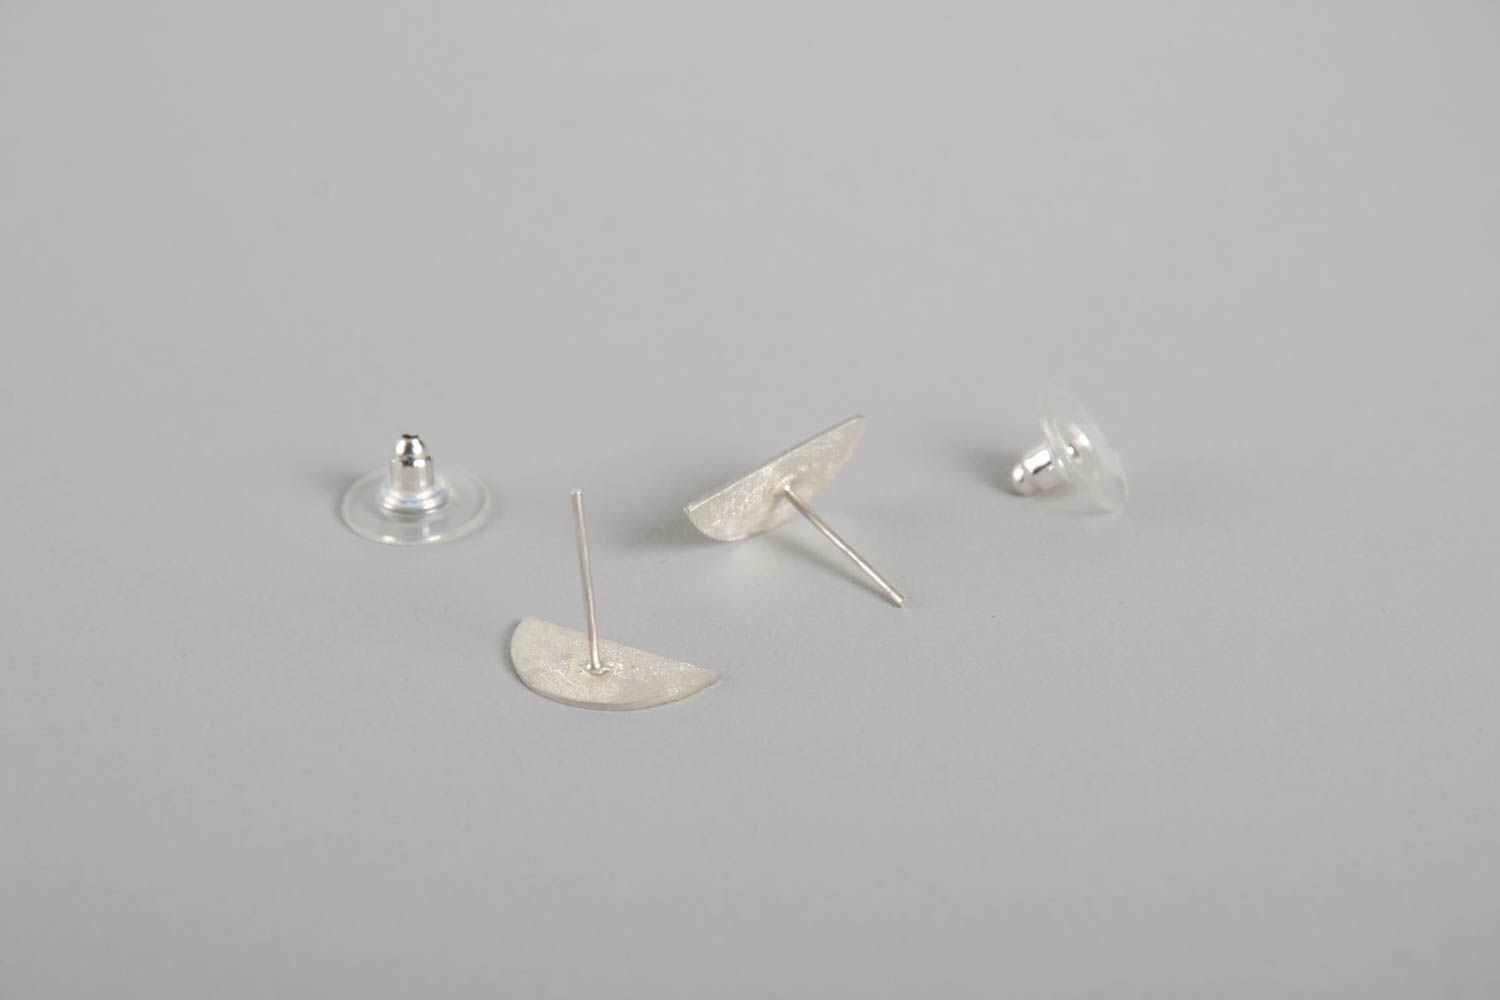 Handmade earrings for women designer accessory gift ideas unusual jewelry photo 4